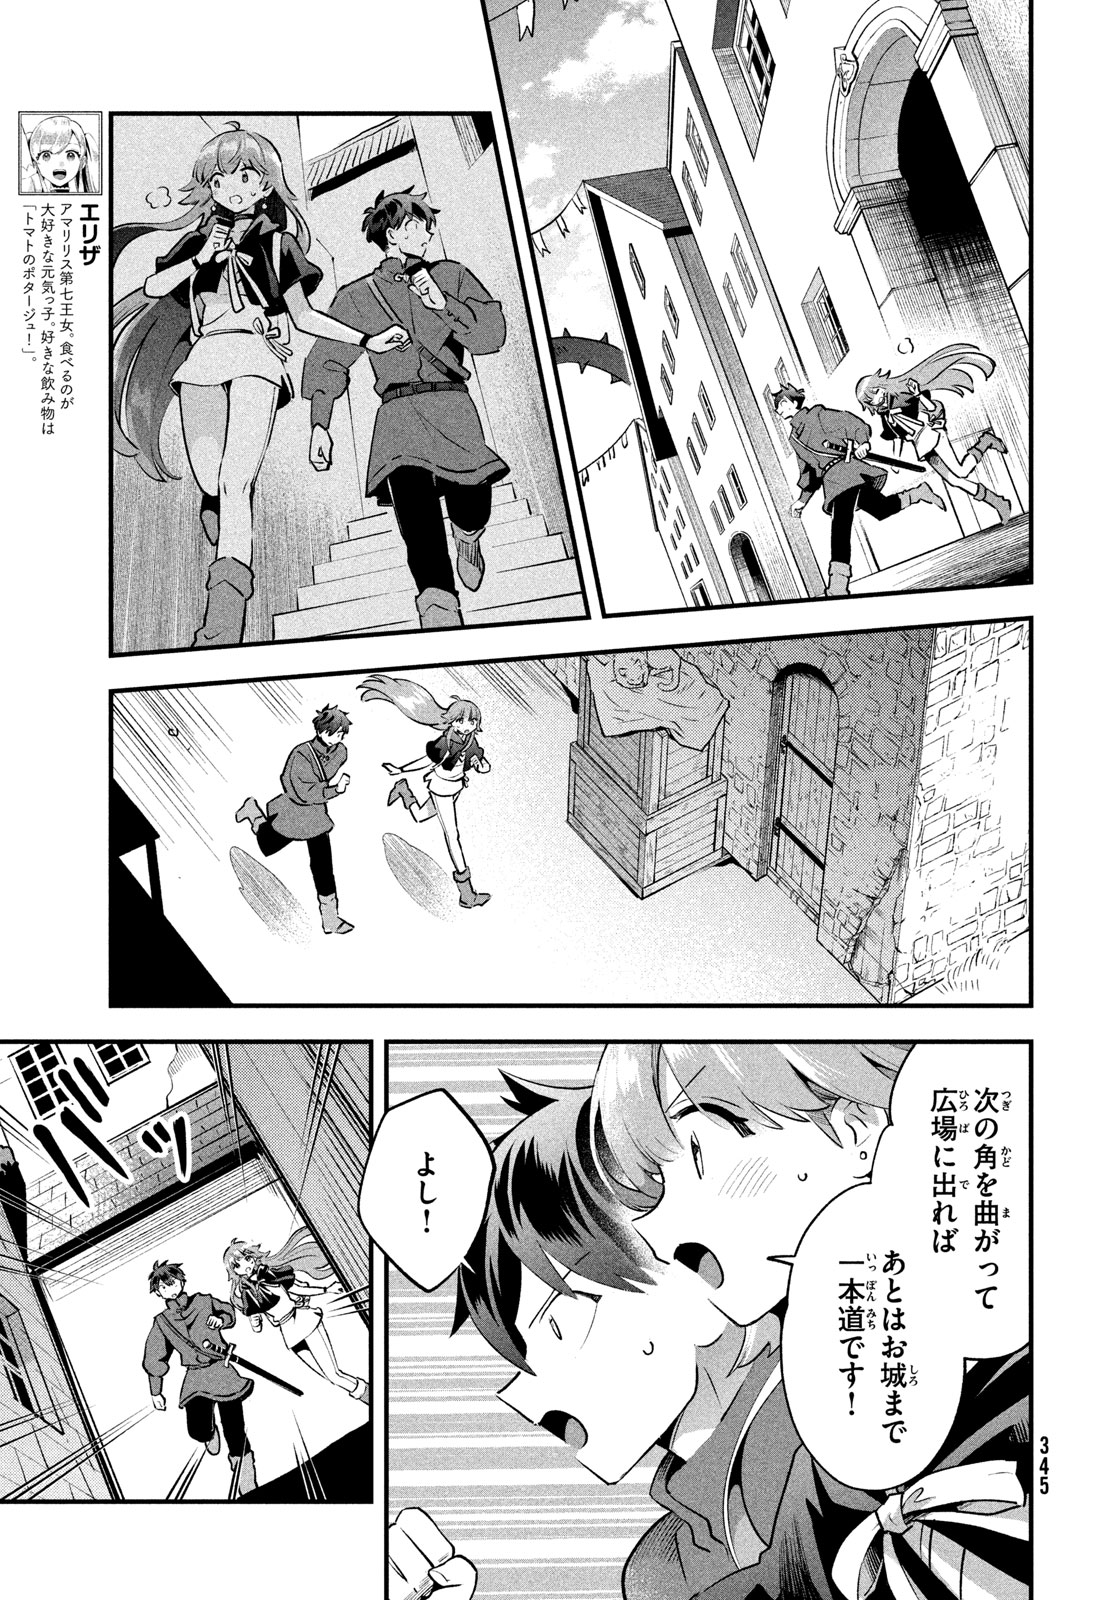 7-nin no Nemuri Hime - Chapter 44 - Page 5